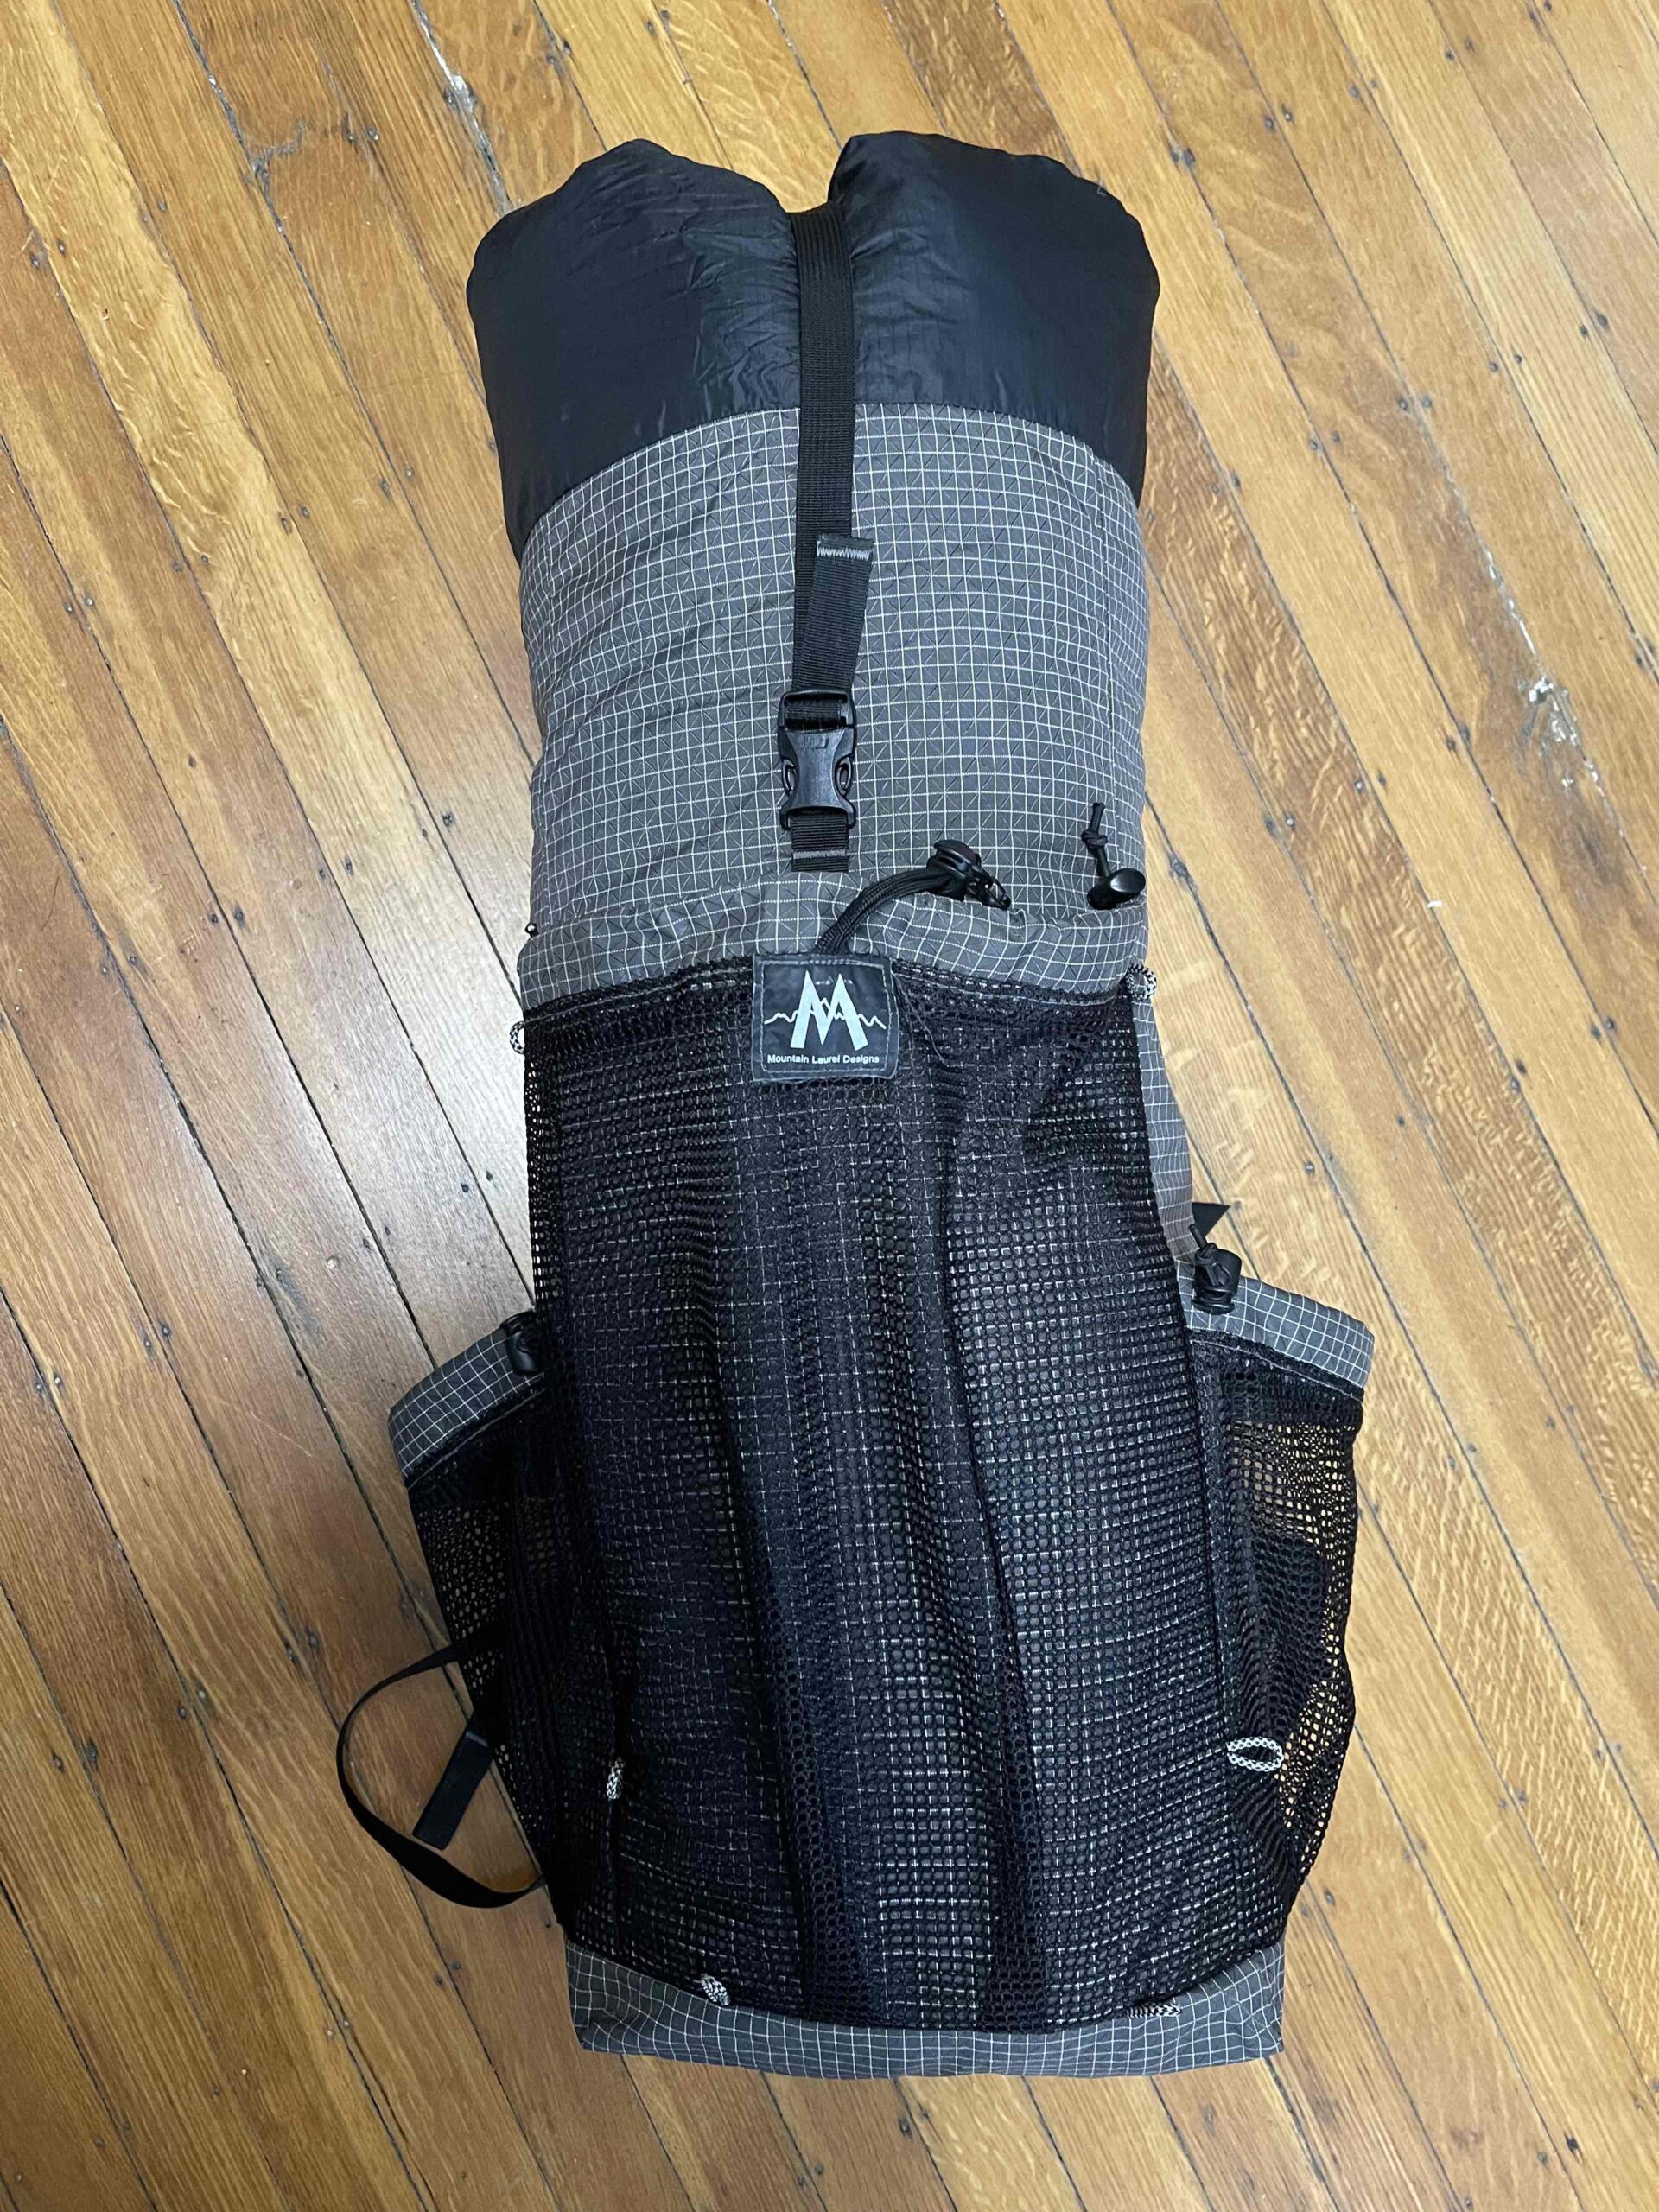 FS MLD Burn 38L Backpack, Medium Torso - Price Reduced